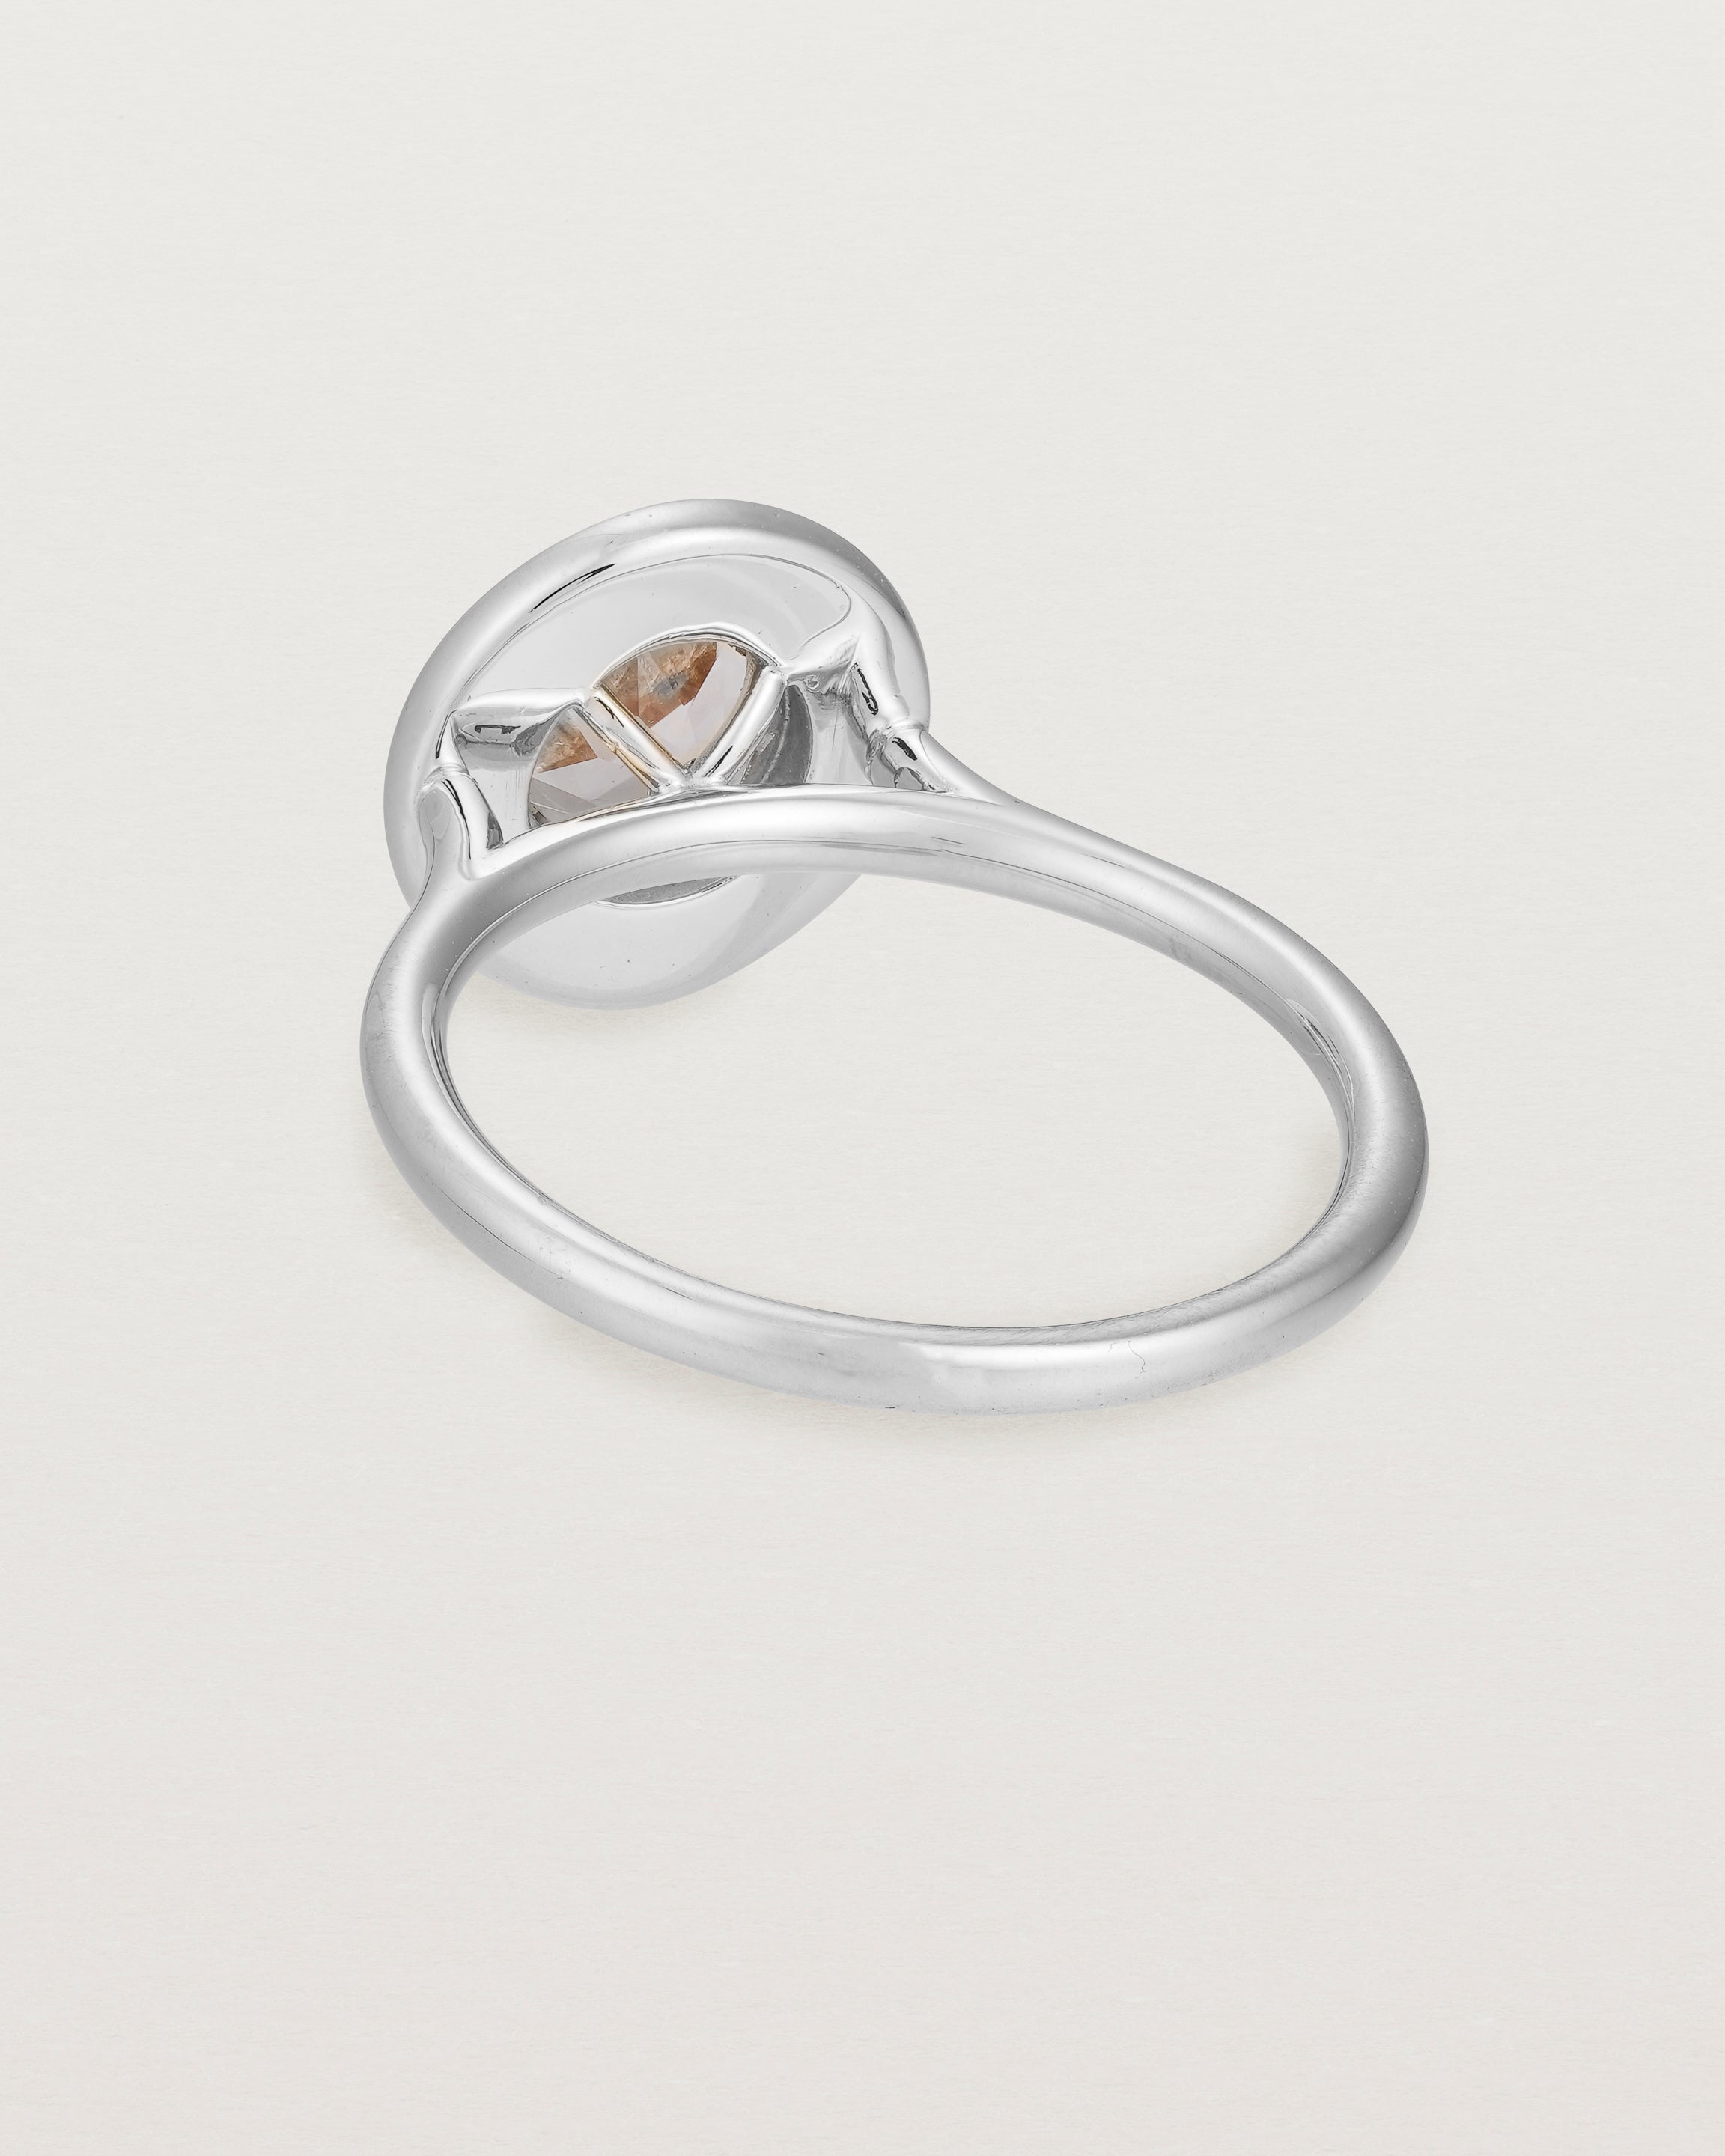 Back view of the Imogen Halo Ring | Morganite & Diamonds in White Gold.